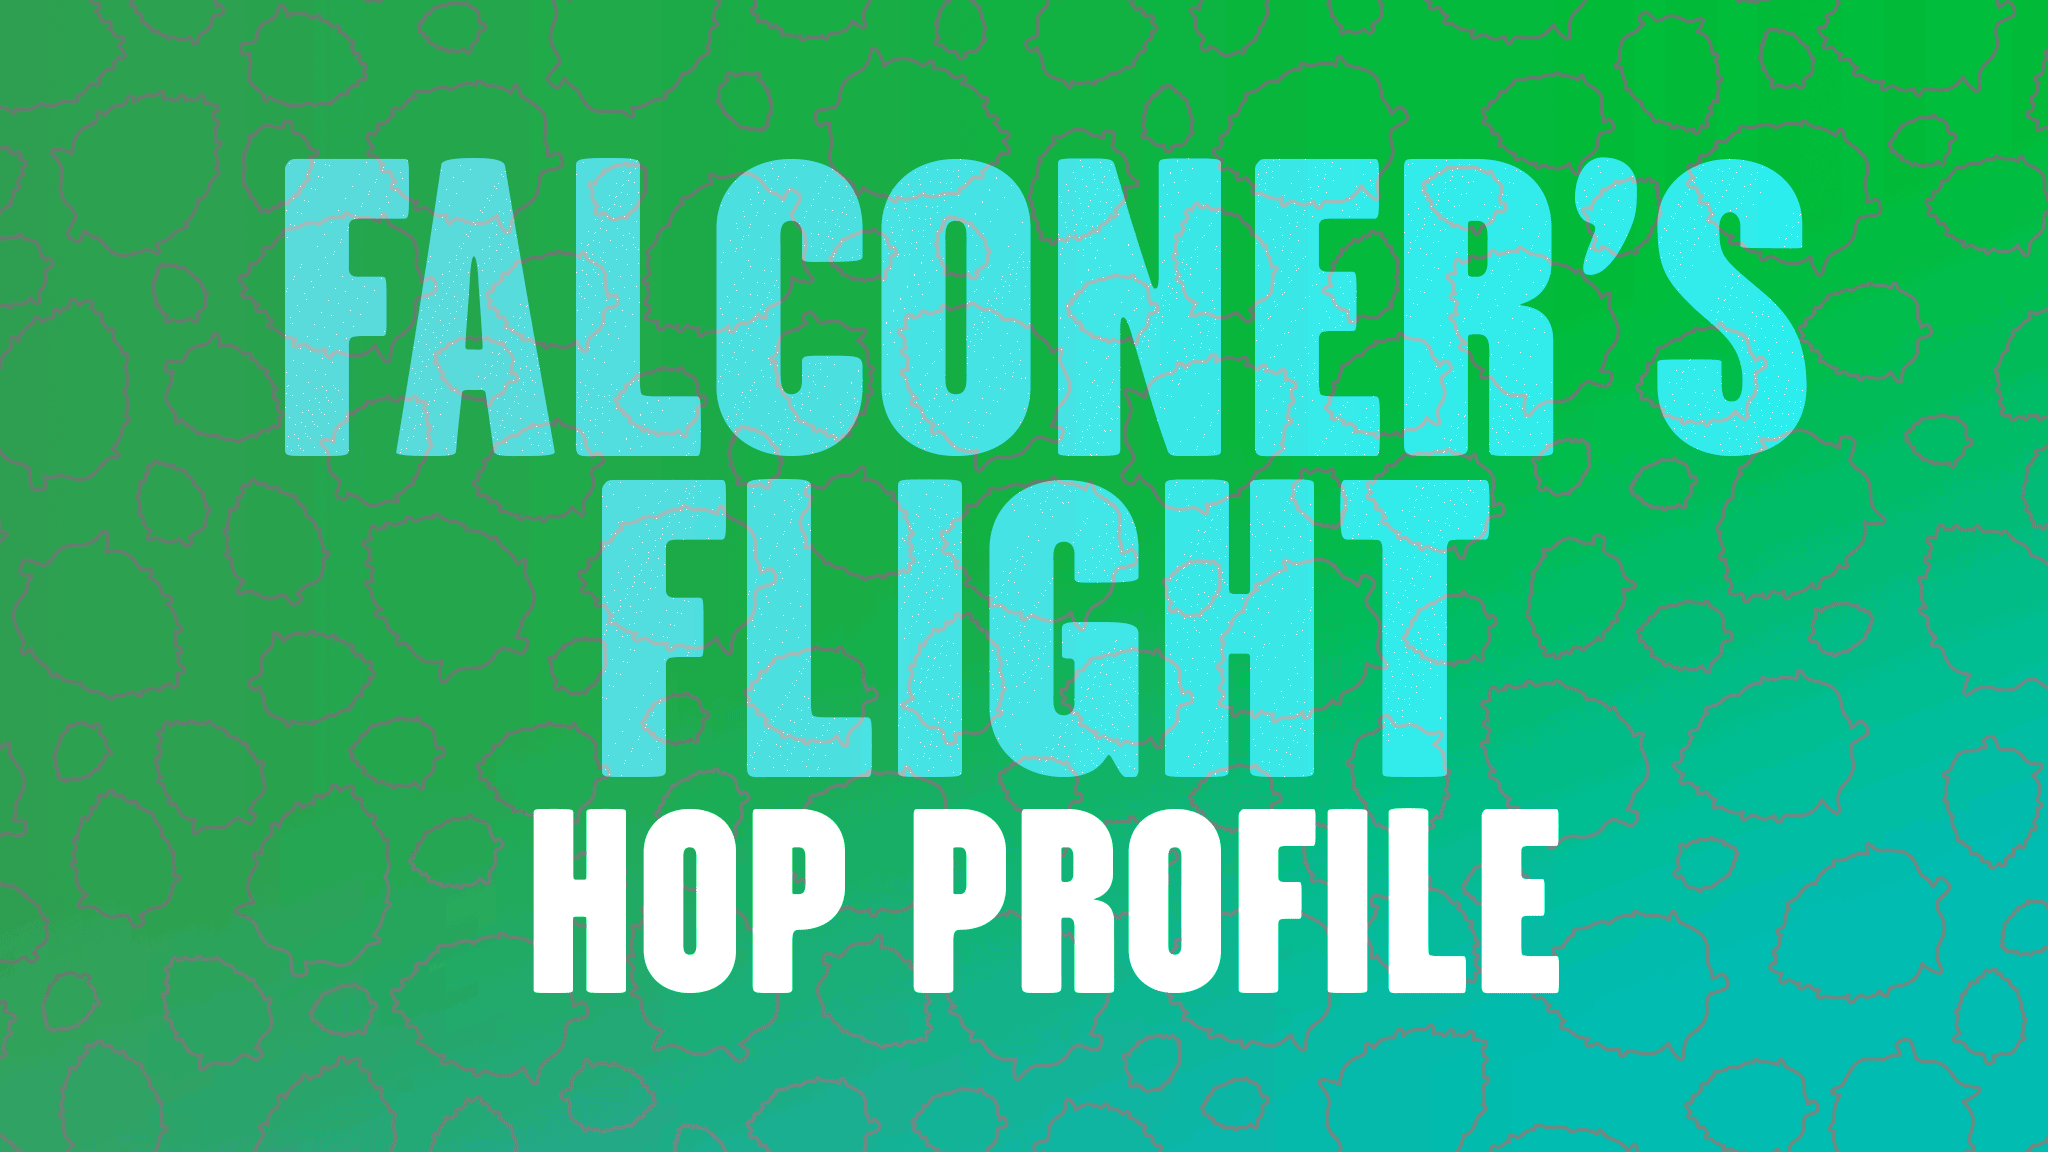 Hop Profile: Falconer's Flight